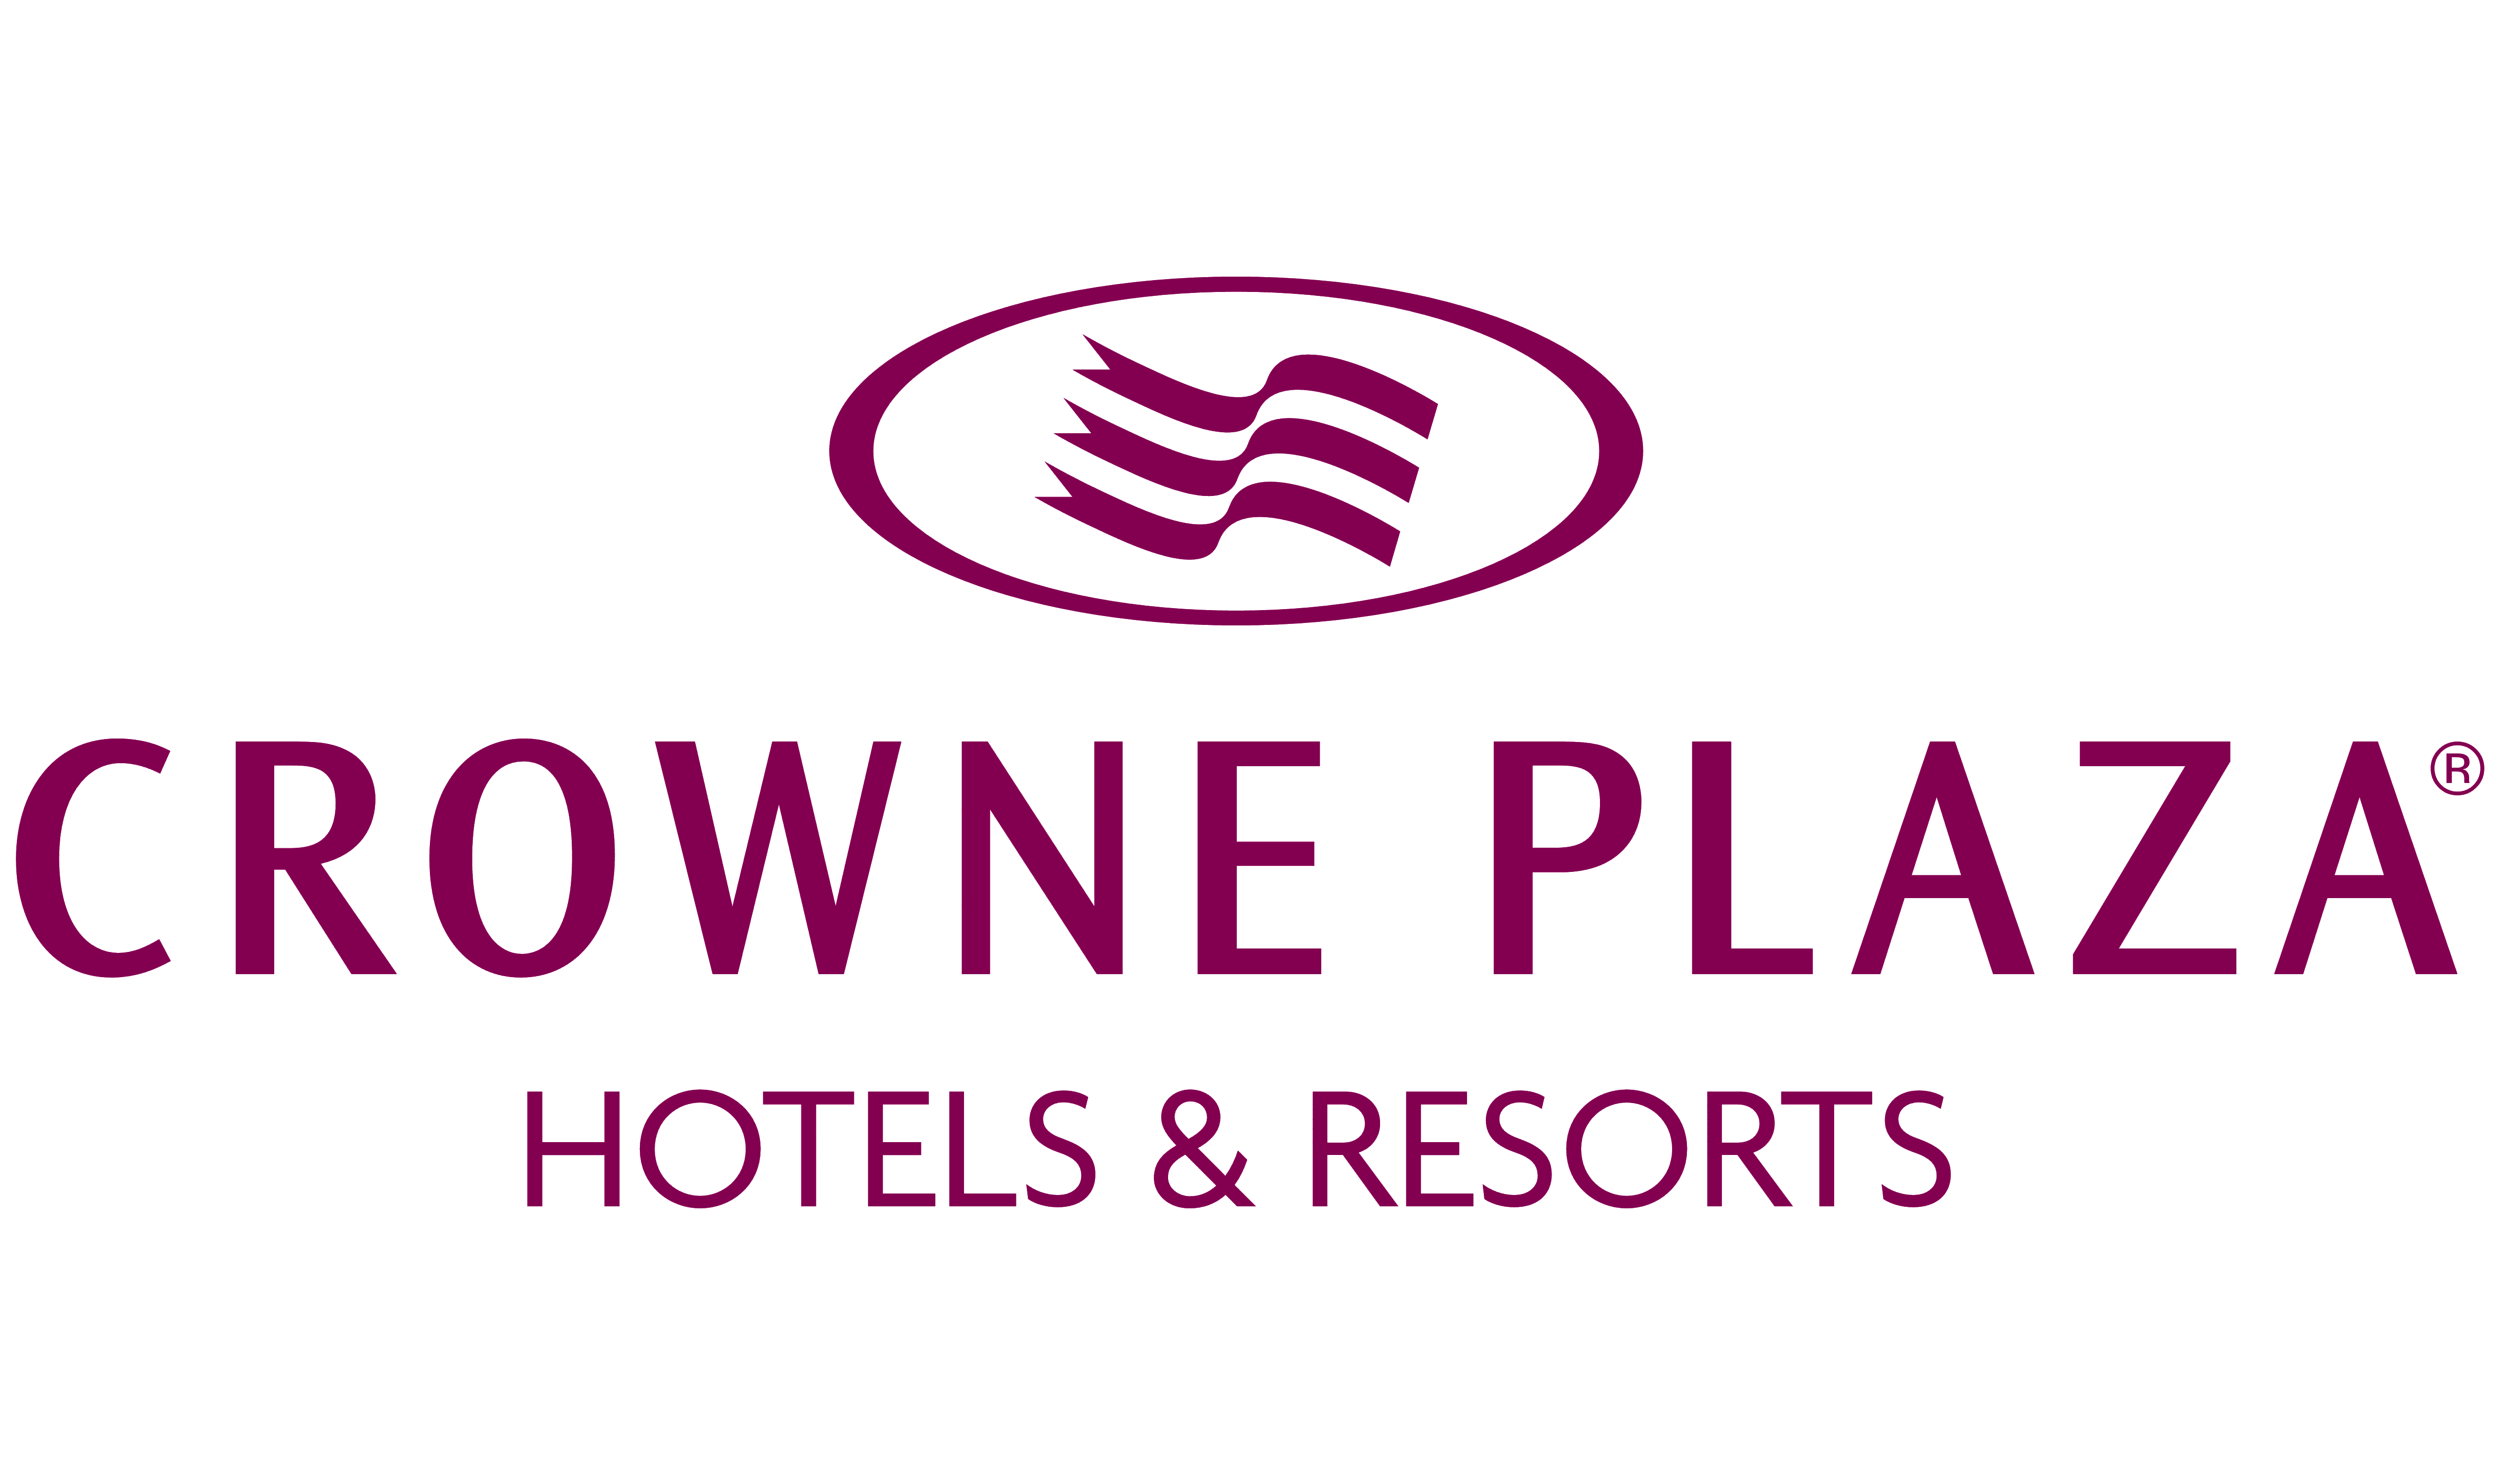 Crowne Plaza Logo 